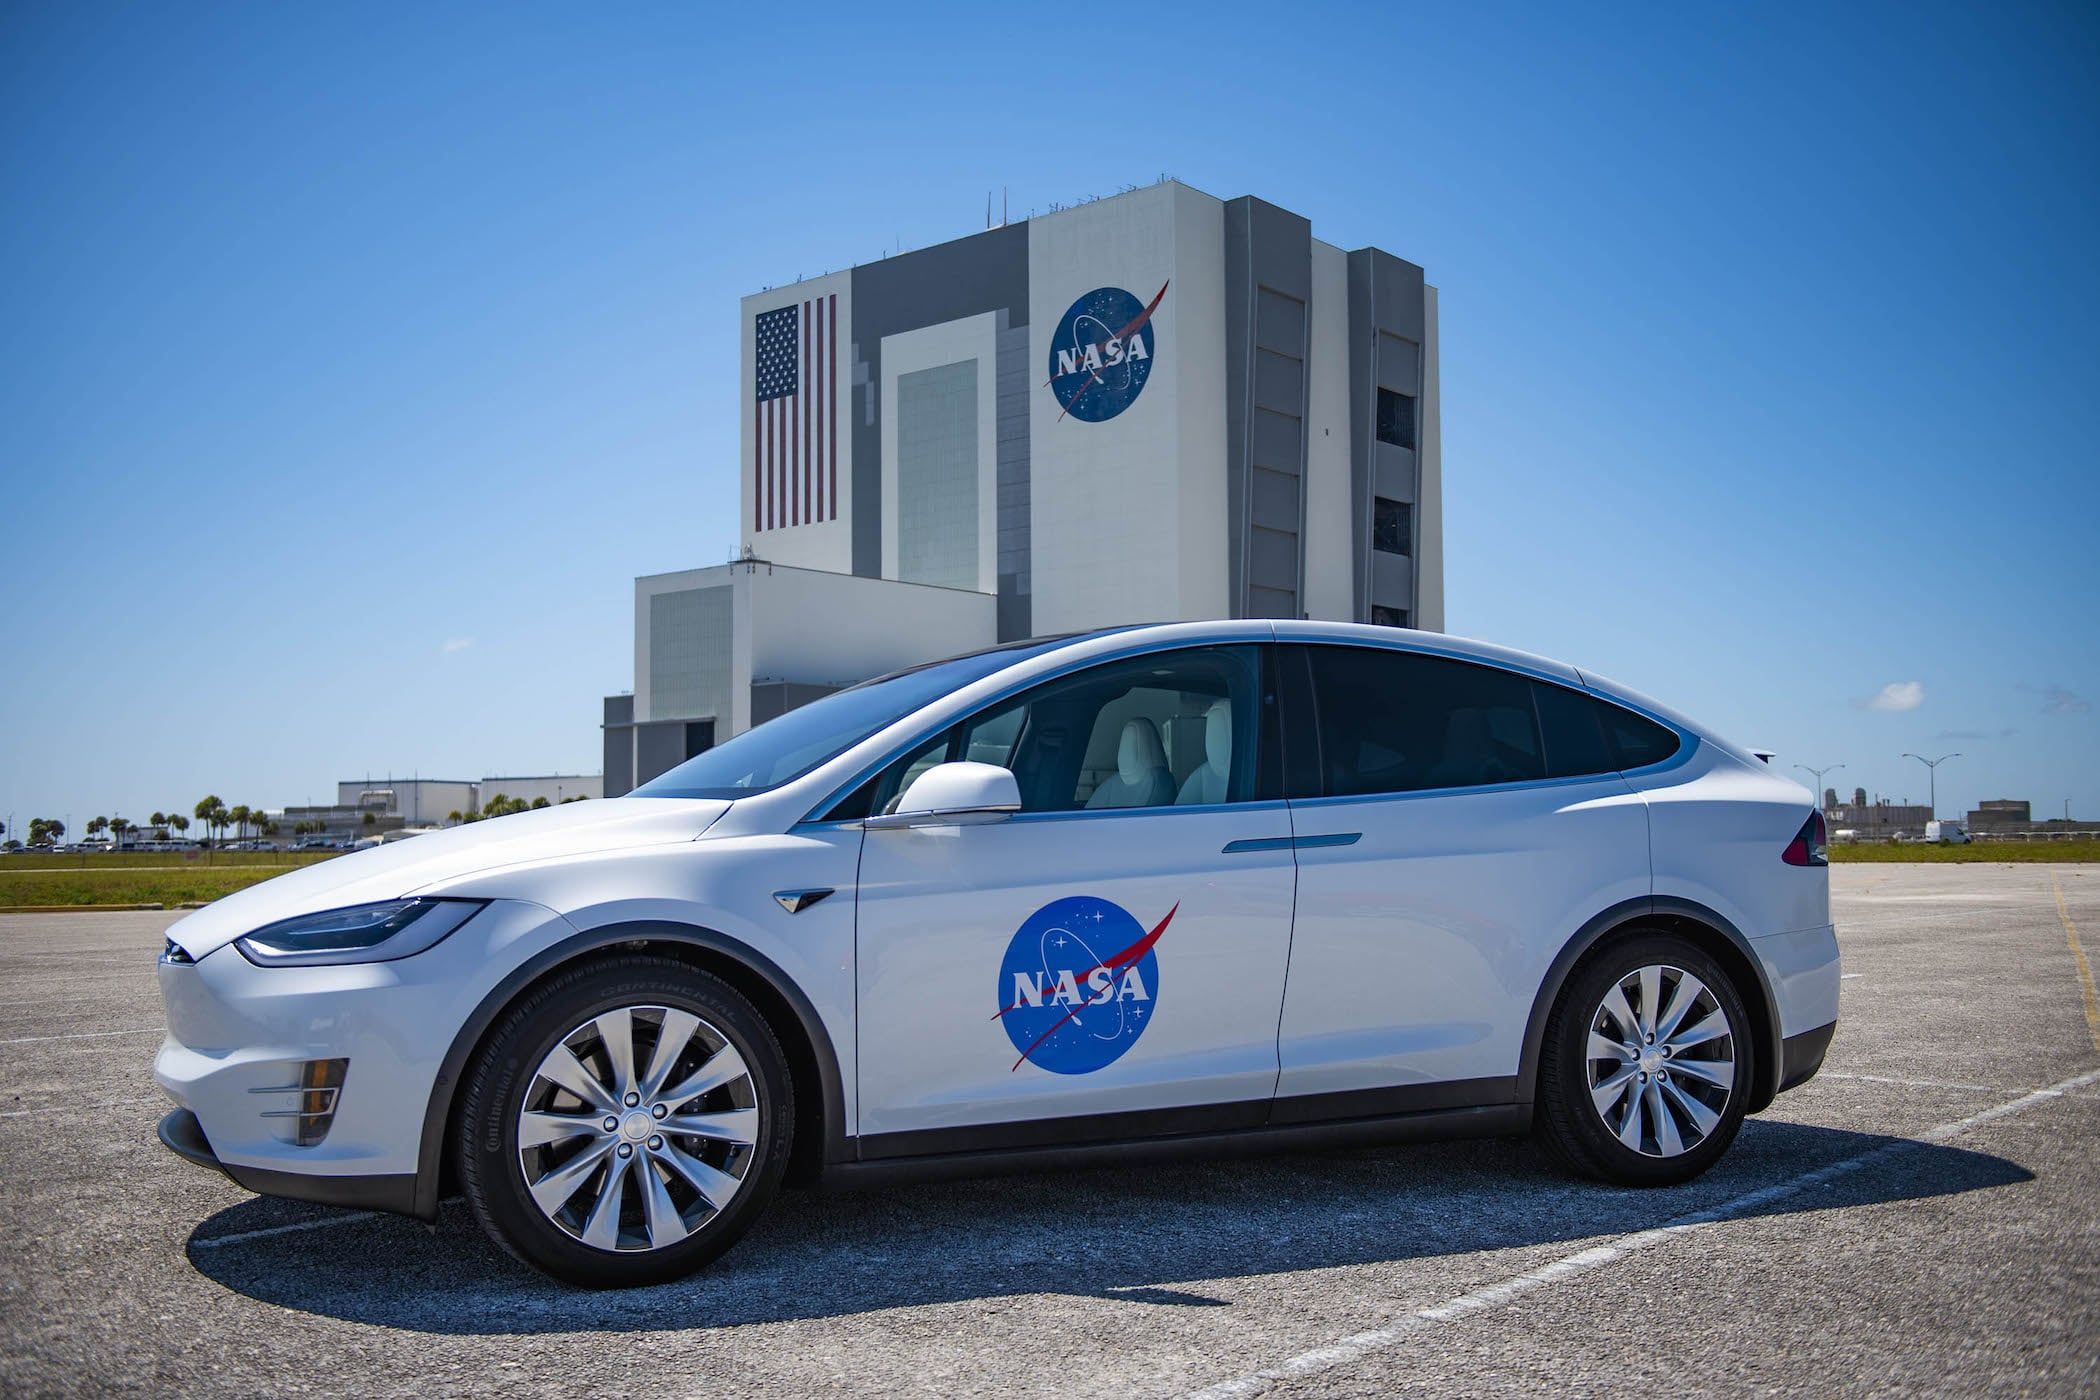 NASA’s new Astrovan — a Tesla Model X